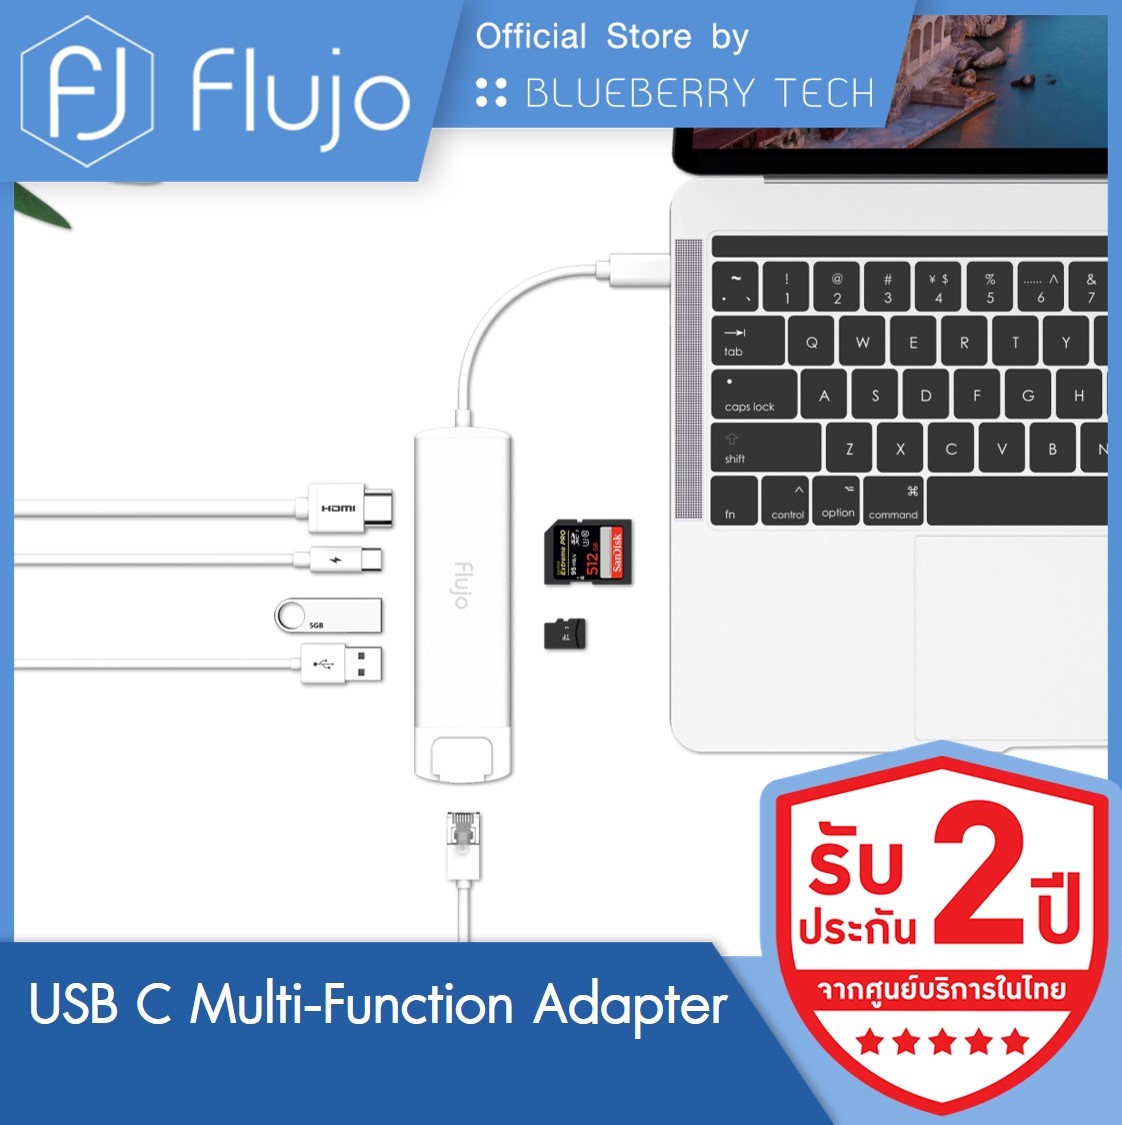 FLUJO รุ่น CH-55 7 in 1 USB C Hub ตัวแปลง USB Type C to Power Delivery x 1, 4k HDMI x 1, TF/SD Card Reader x 1, USB 3.0 x 2, Lan Port x 1 รับประกัน 2 ปี ศูนย์ไทย